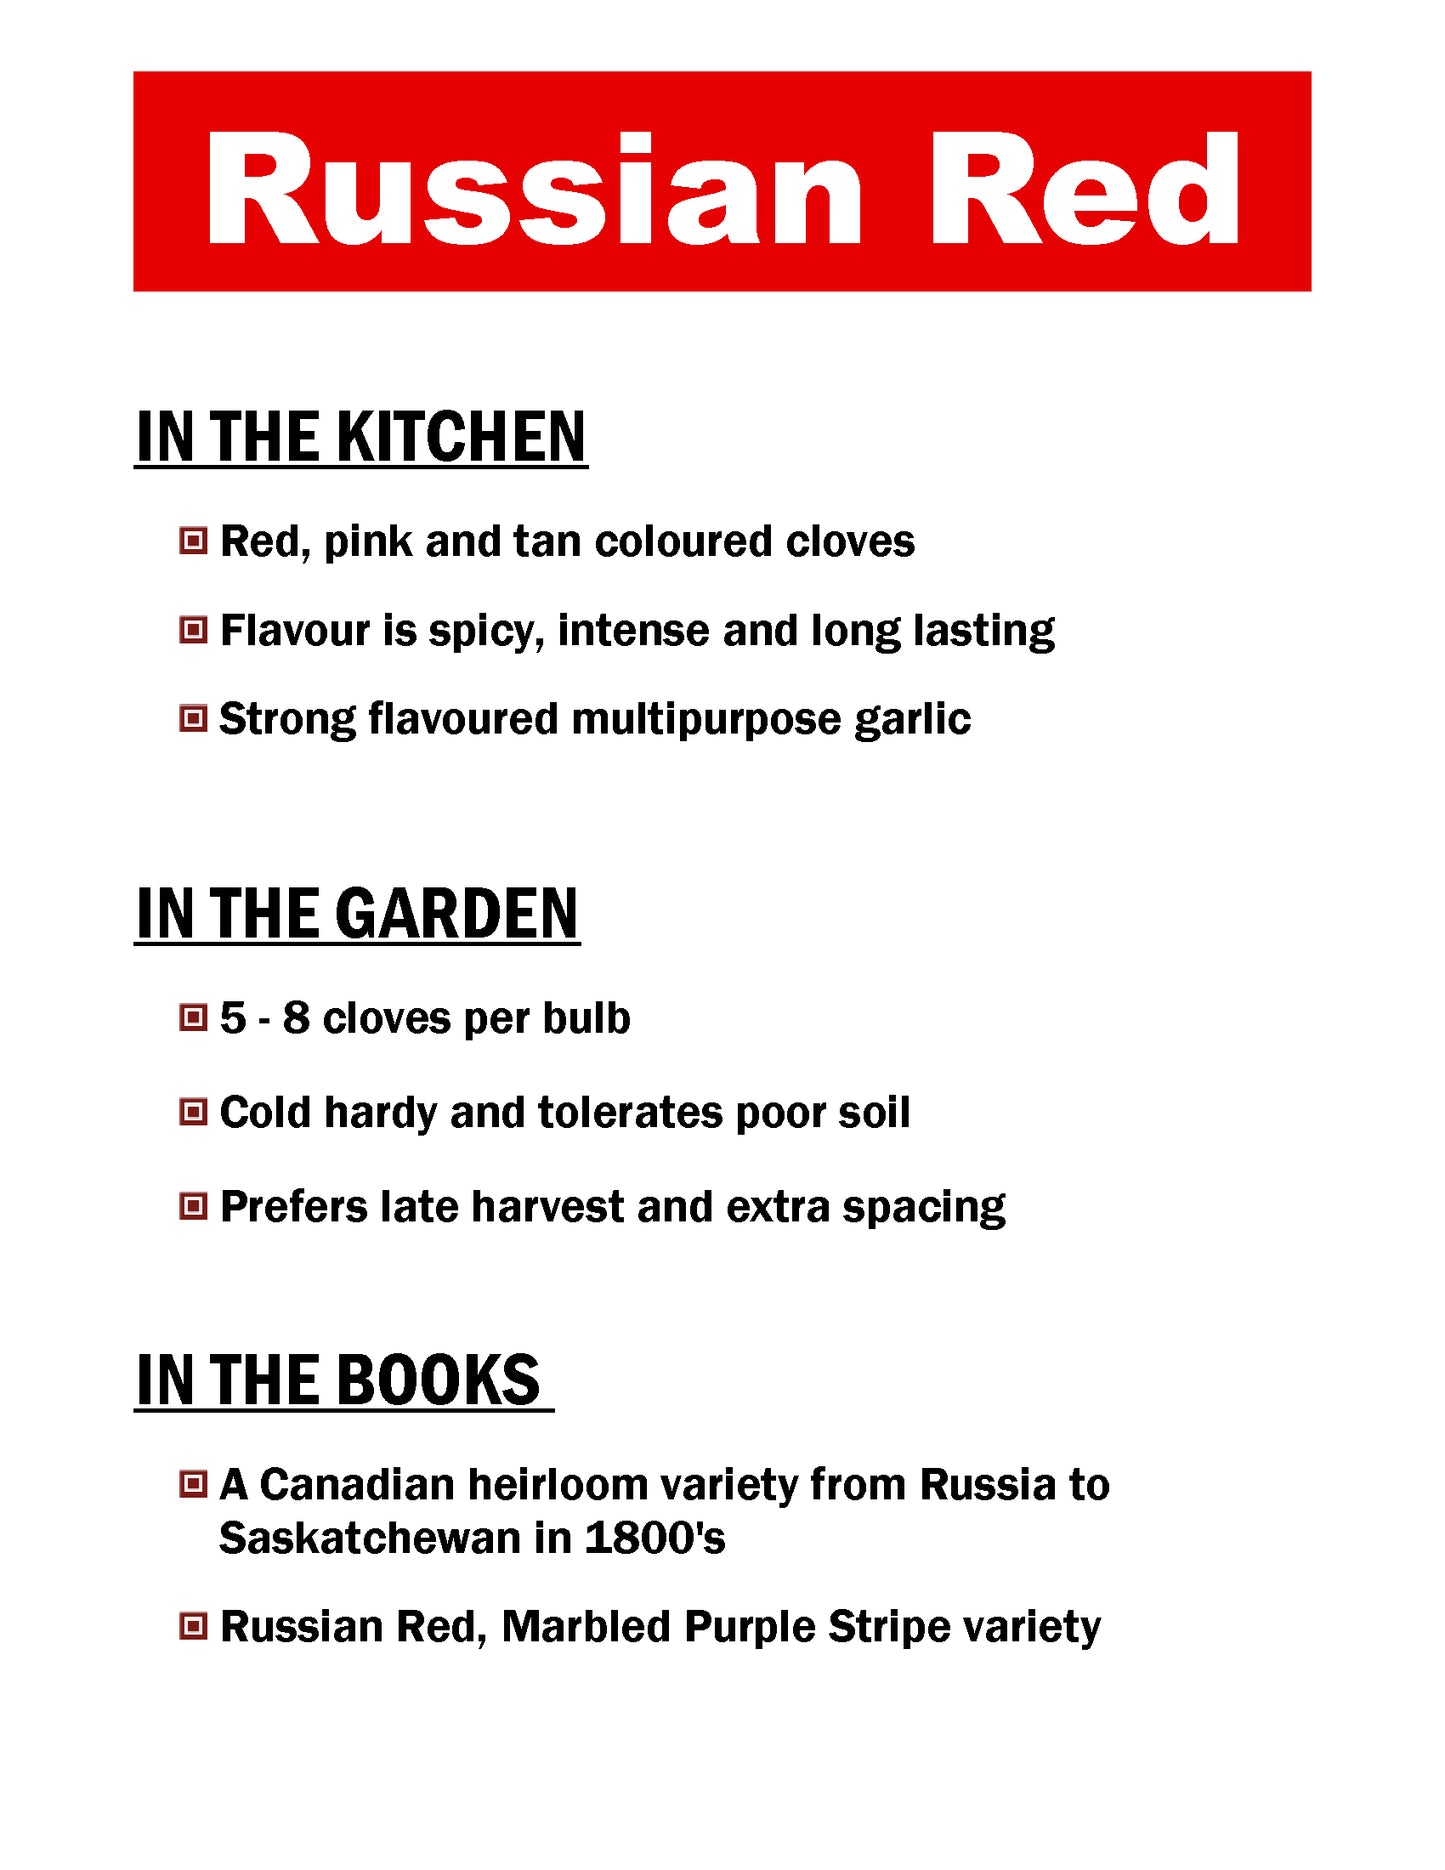 Russian Red, Marbled Purple Stripe garlic description card by Garlicloves